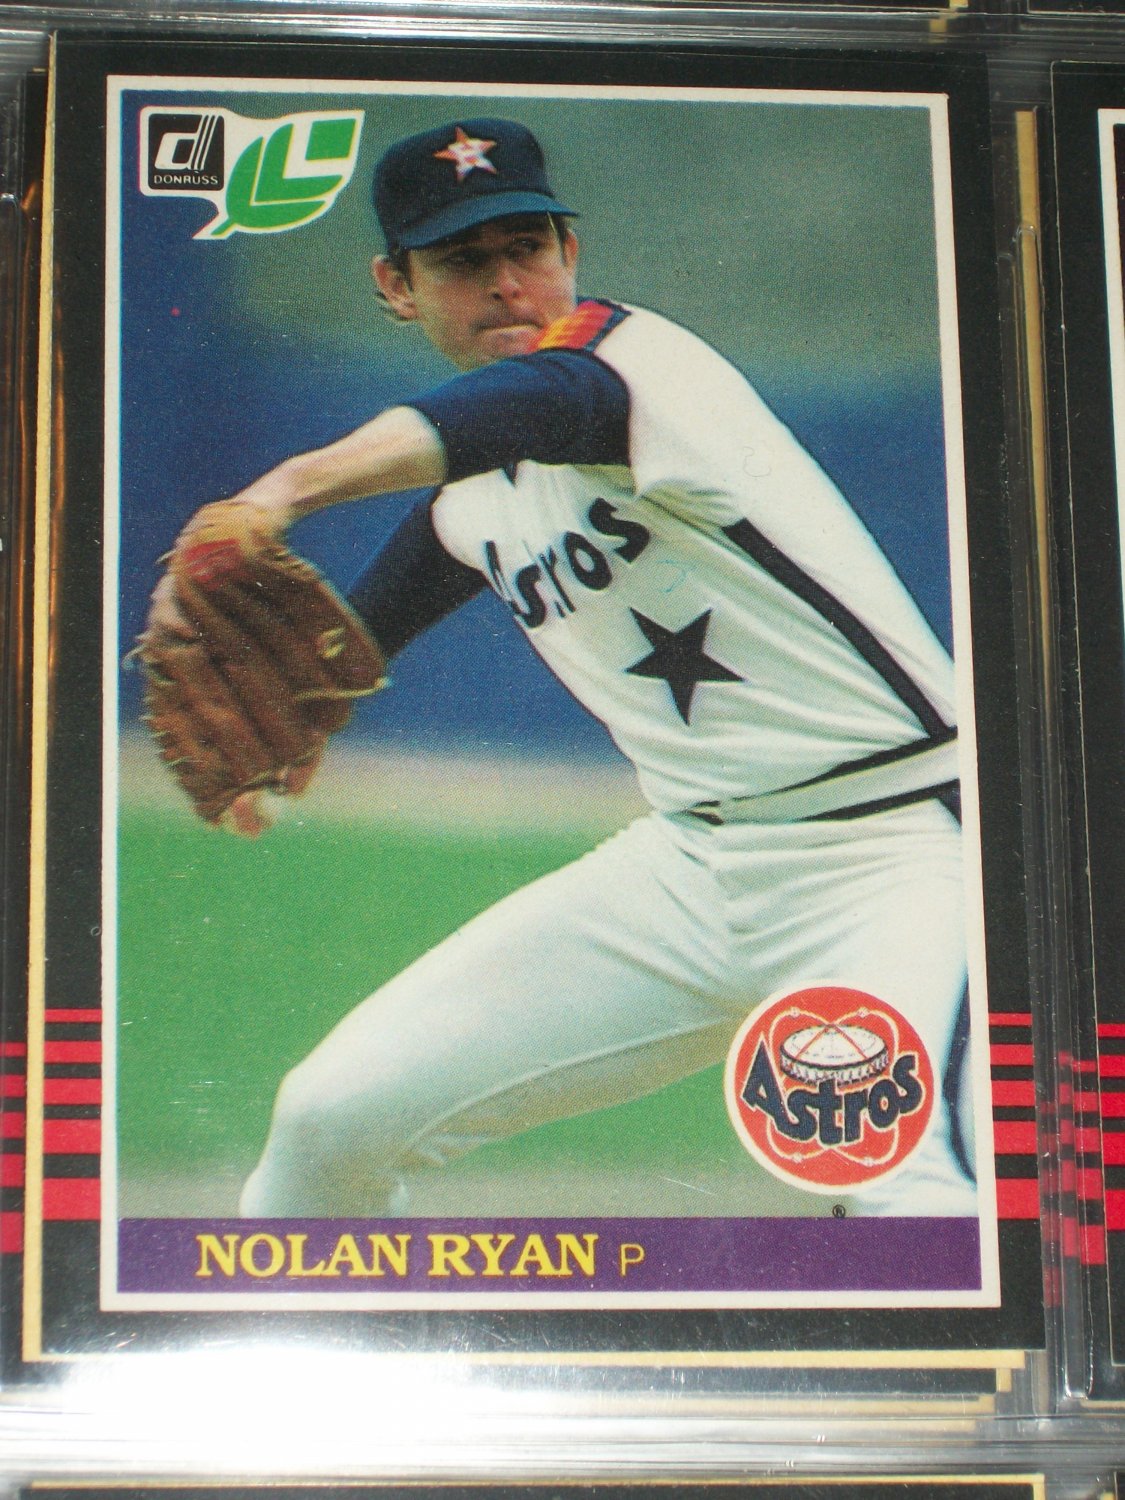 Nolan Ryan 85 Leaf baseball card